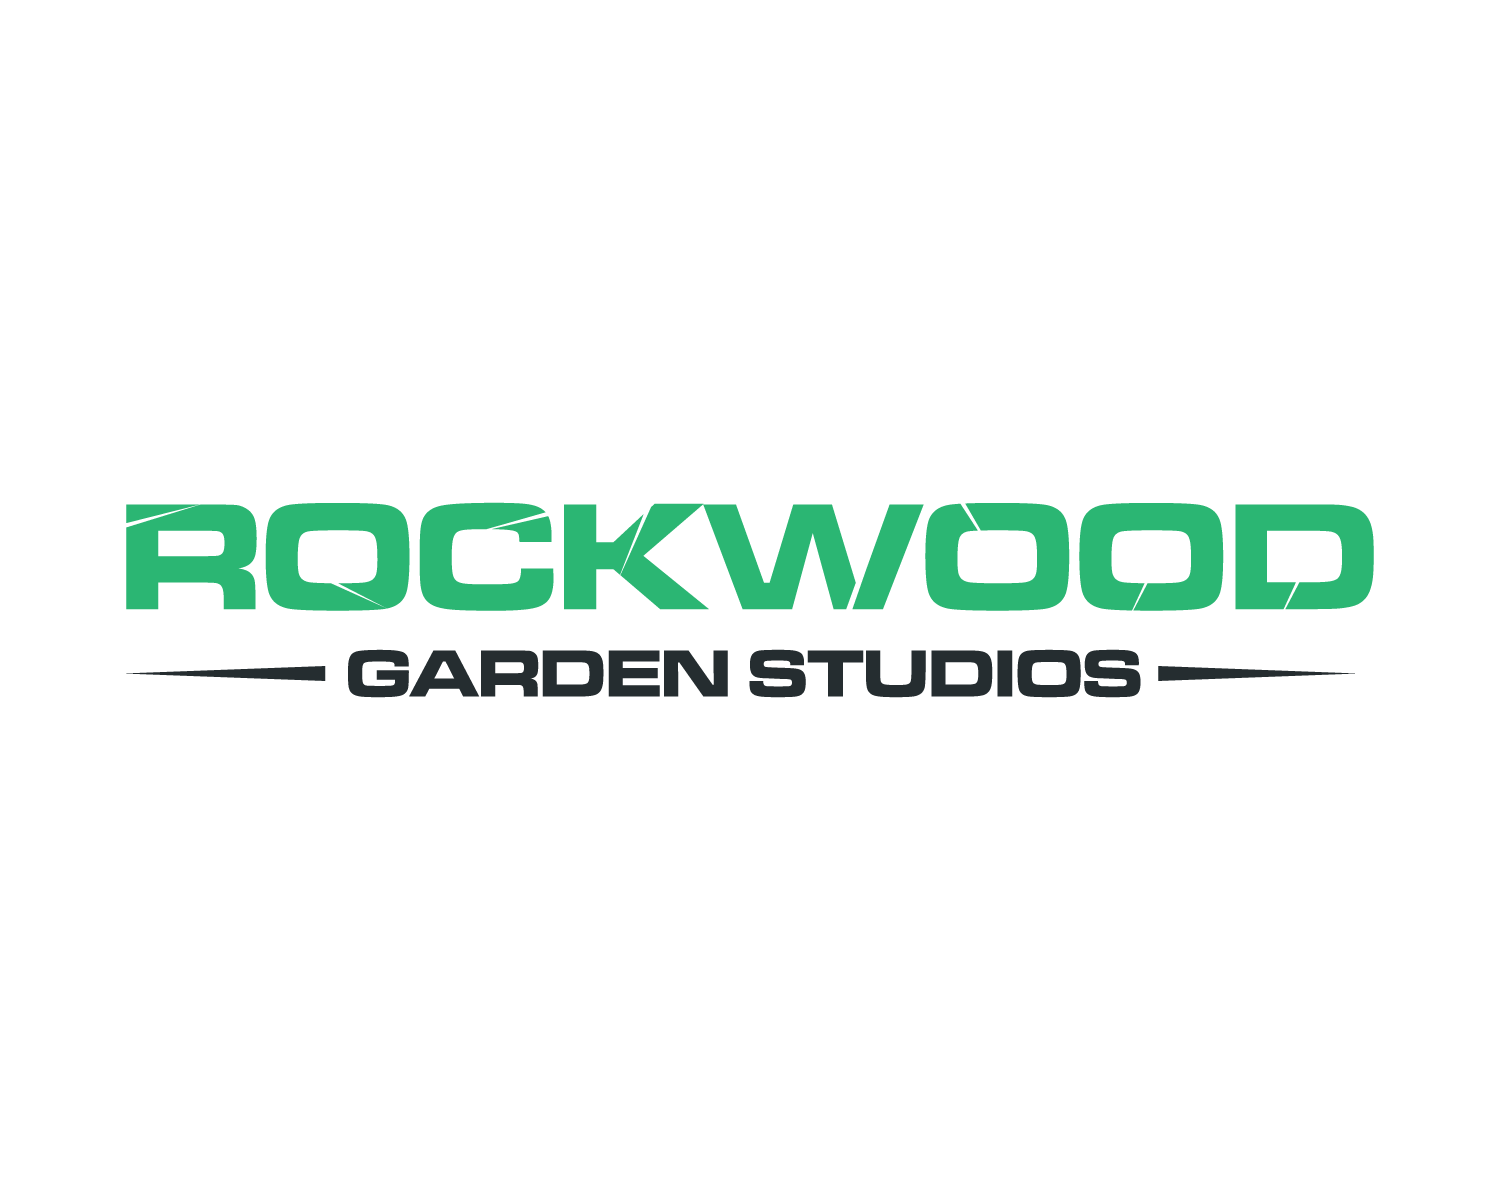 Rockwood Garden Studios logo